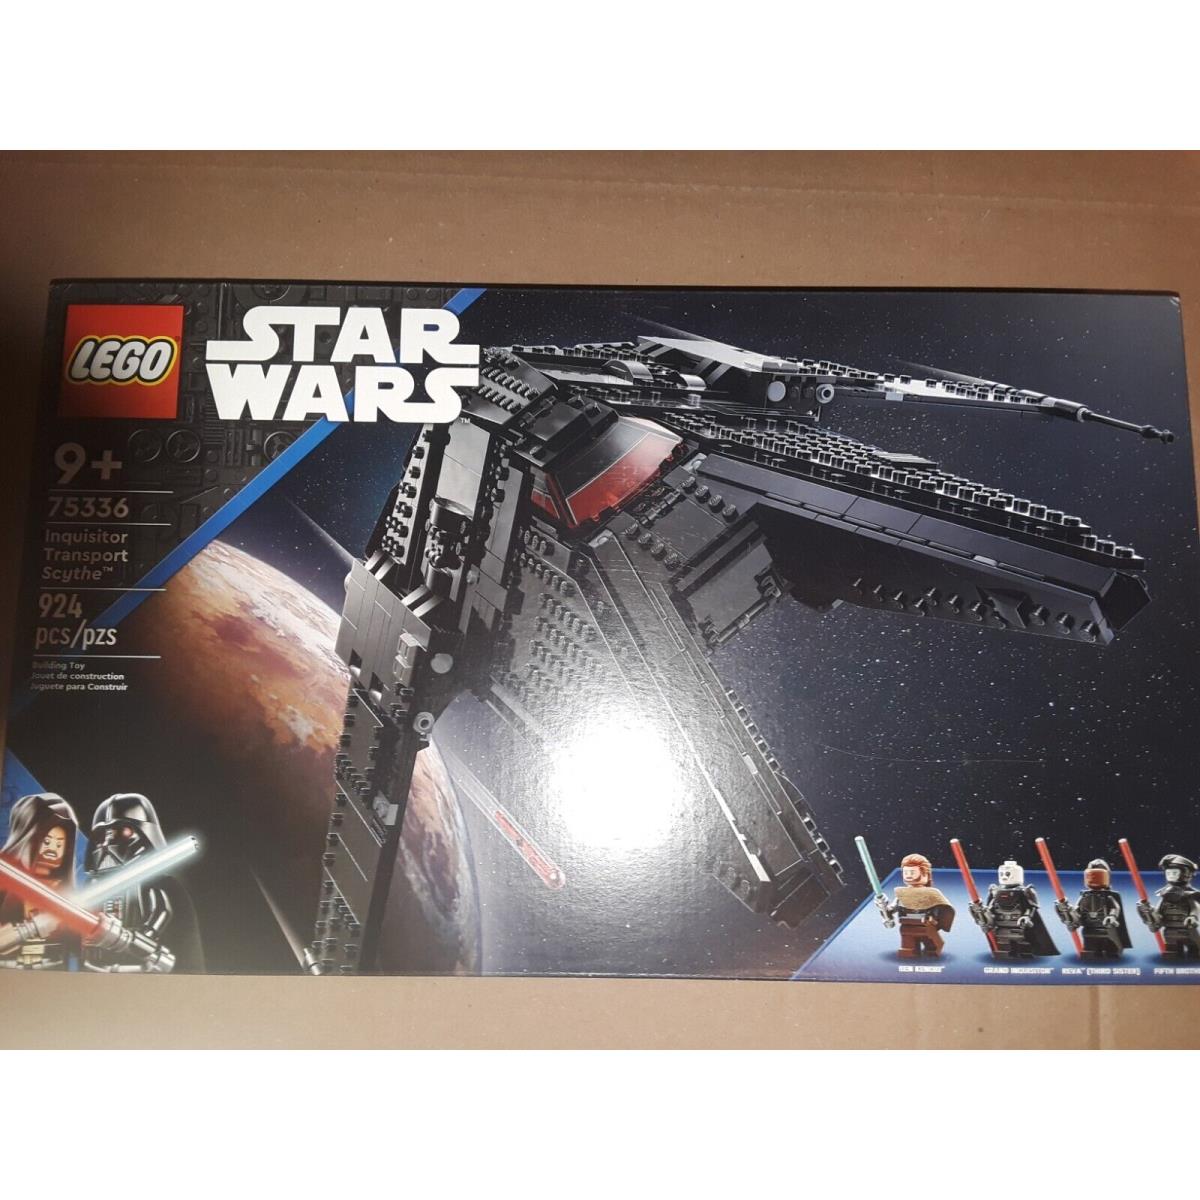 Lego Star Wars 75336 Inquisitor Transport Scythe Starship Toy Building Frshp